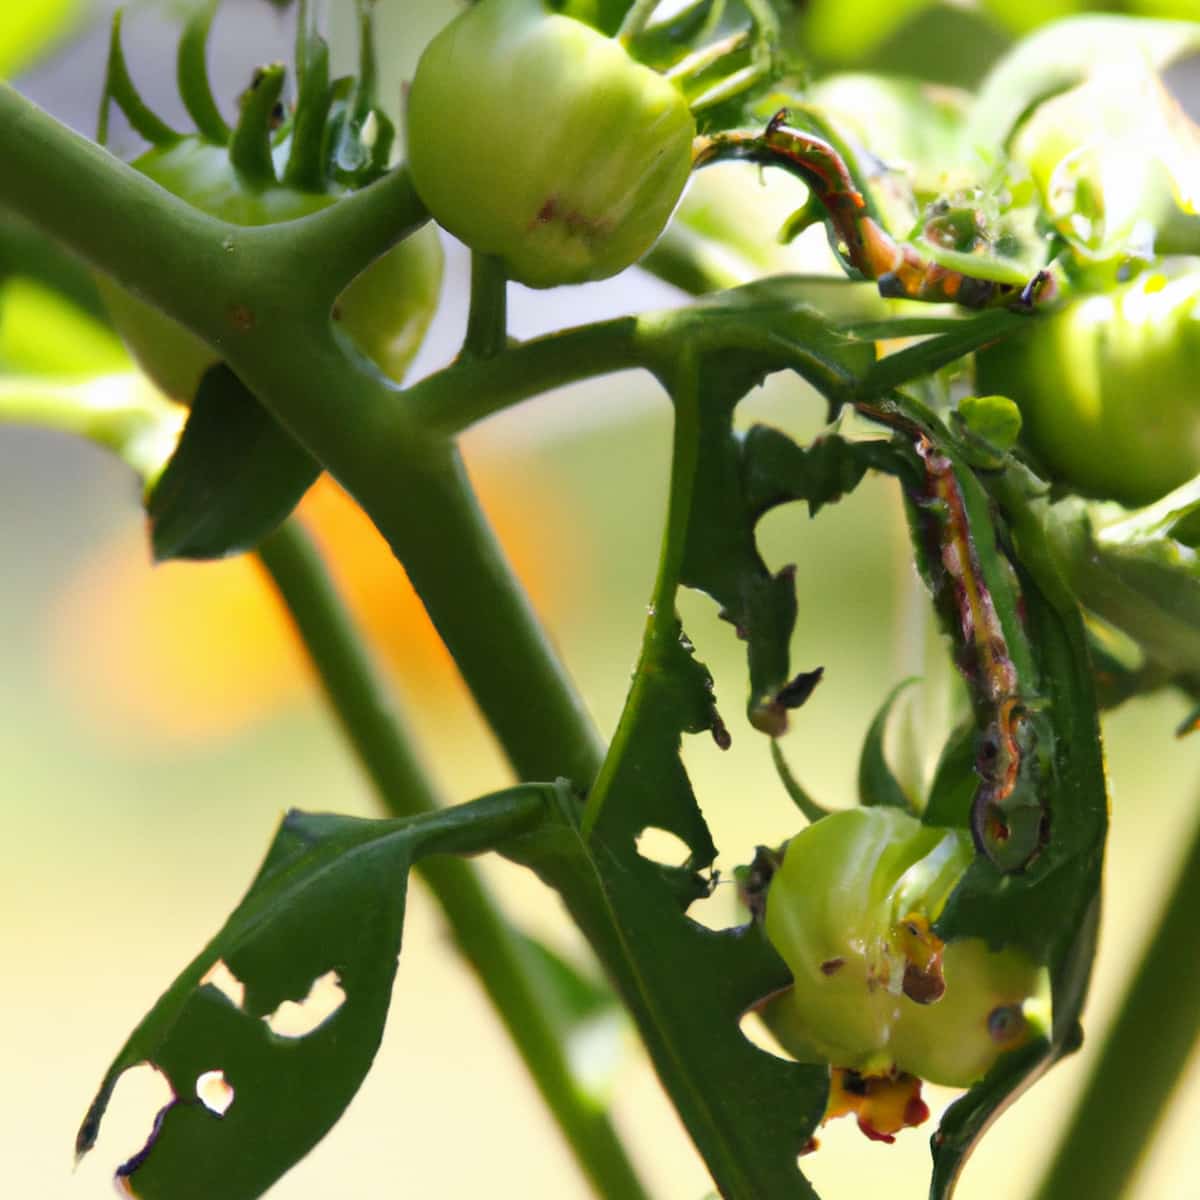 Tobacco caterpillar Management in Tomato